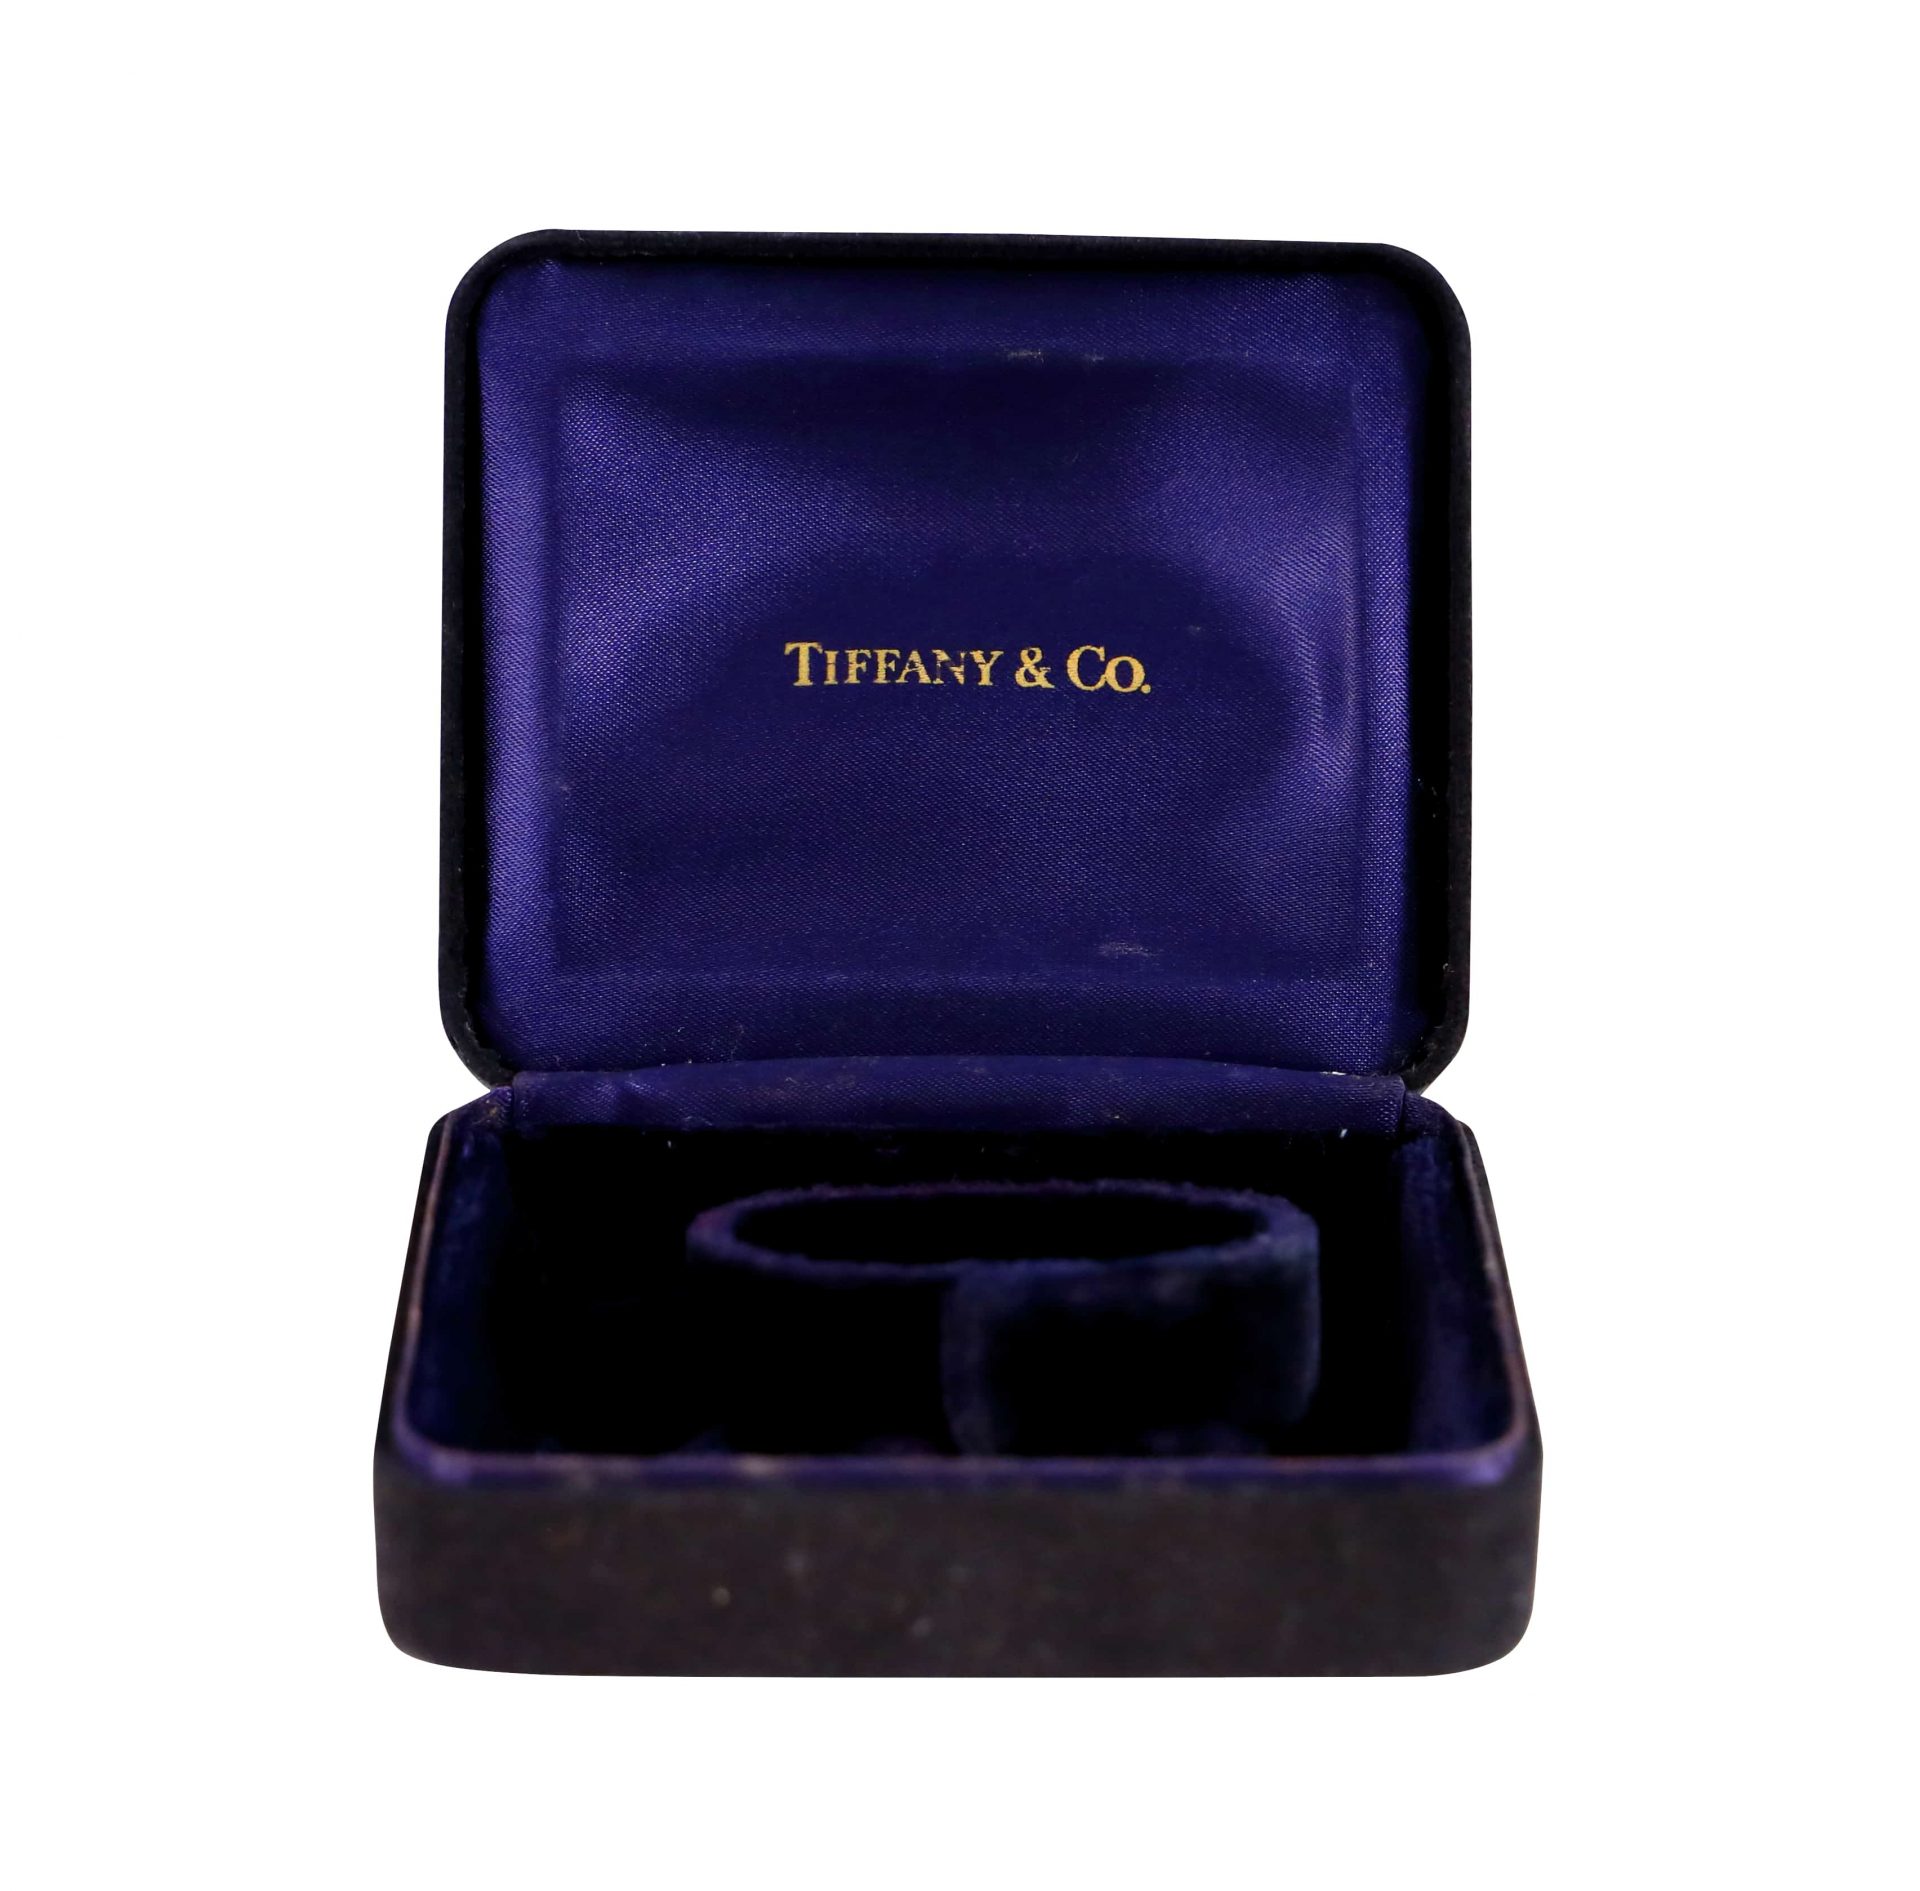 Tiffany Co Watch Box Vintage - Rare Watch Parts